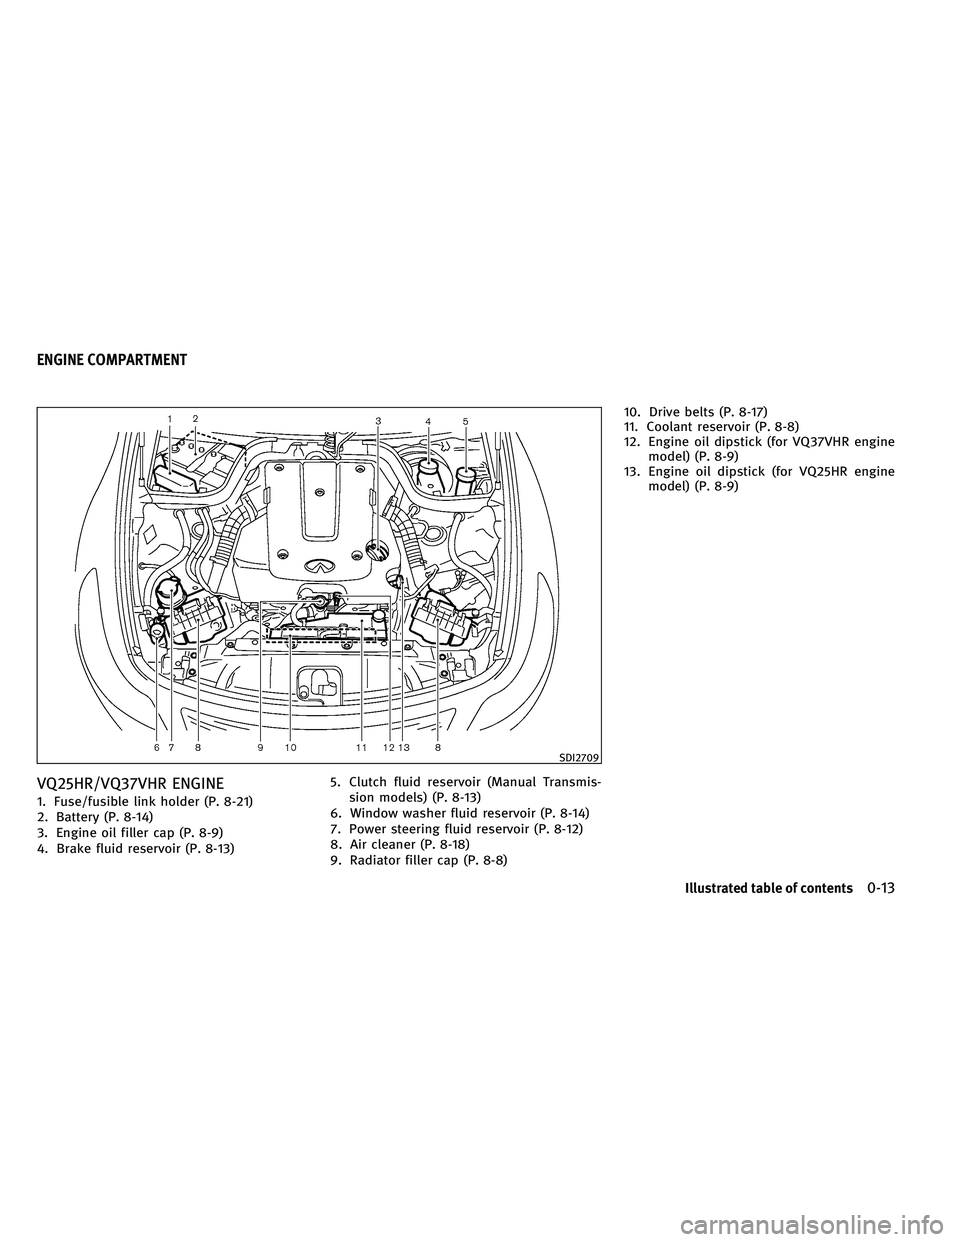 INFINITI G-COUPE 2011 User Guide VQ25HR/VQ37VHR ENGINE
1. Fuse/fusible link holder (P. 8-21)
2. Battery (P. 8-14)
3. Engine oil filler cap (P. 8-9)
4. Brake fluid reservoir (P. 8-13)5. Clutch fluid reservoir (Manual Transmis-
sion mo